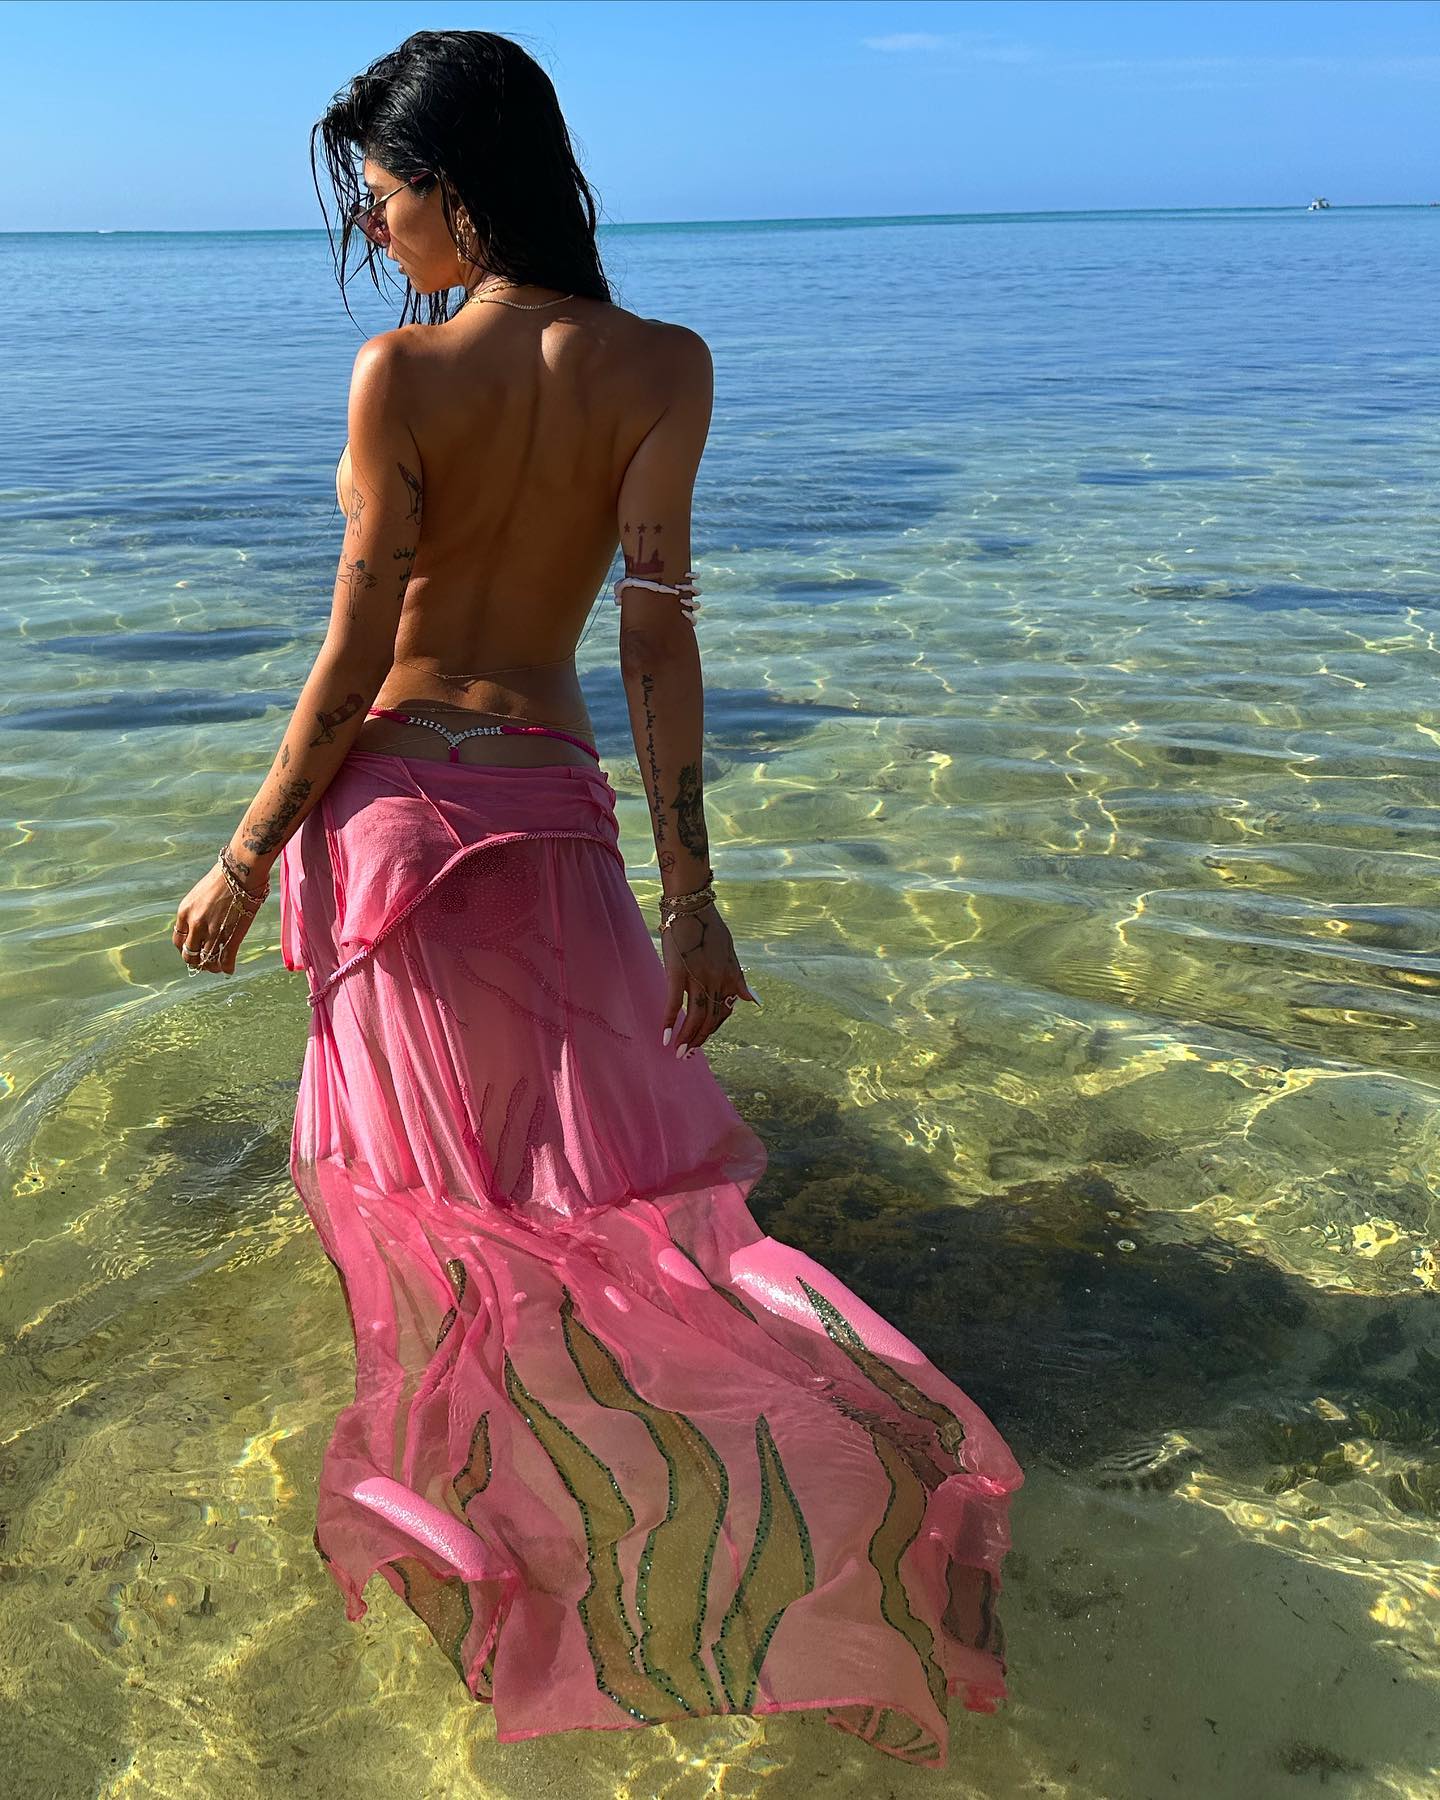 mia khalifa looks hot in sexy pink dress in ocean